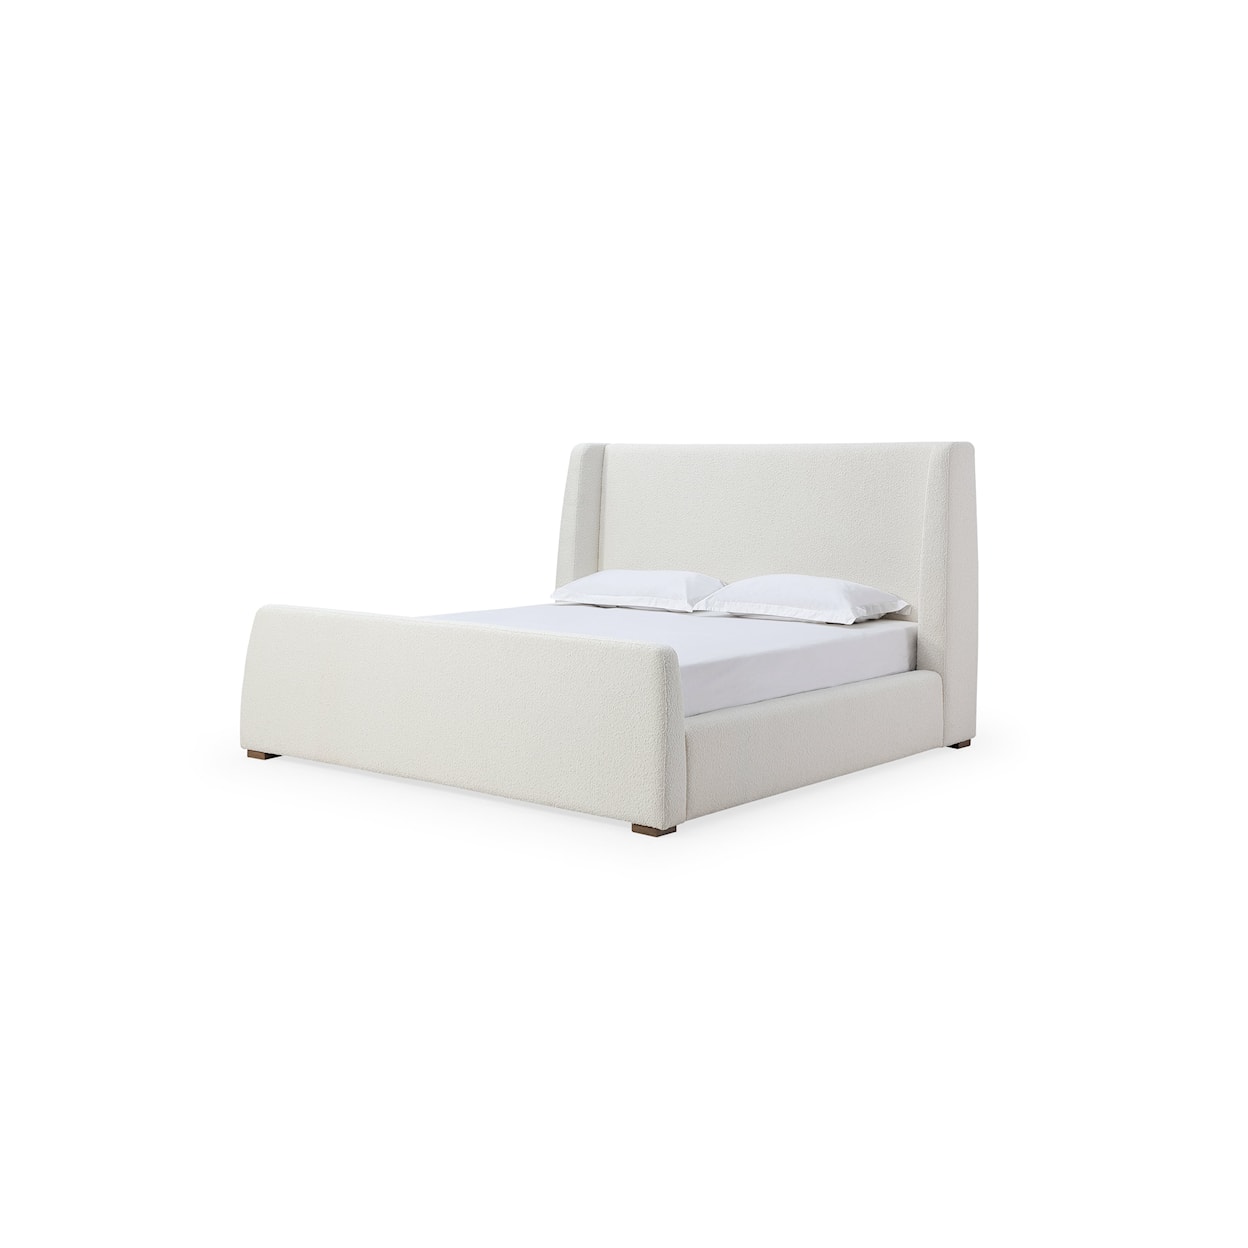 Modus International Formosa Presley Upholstered Full Bed